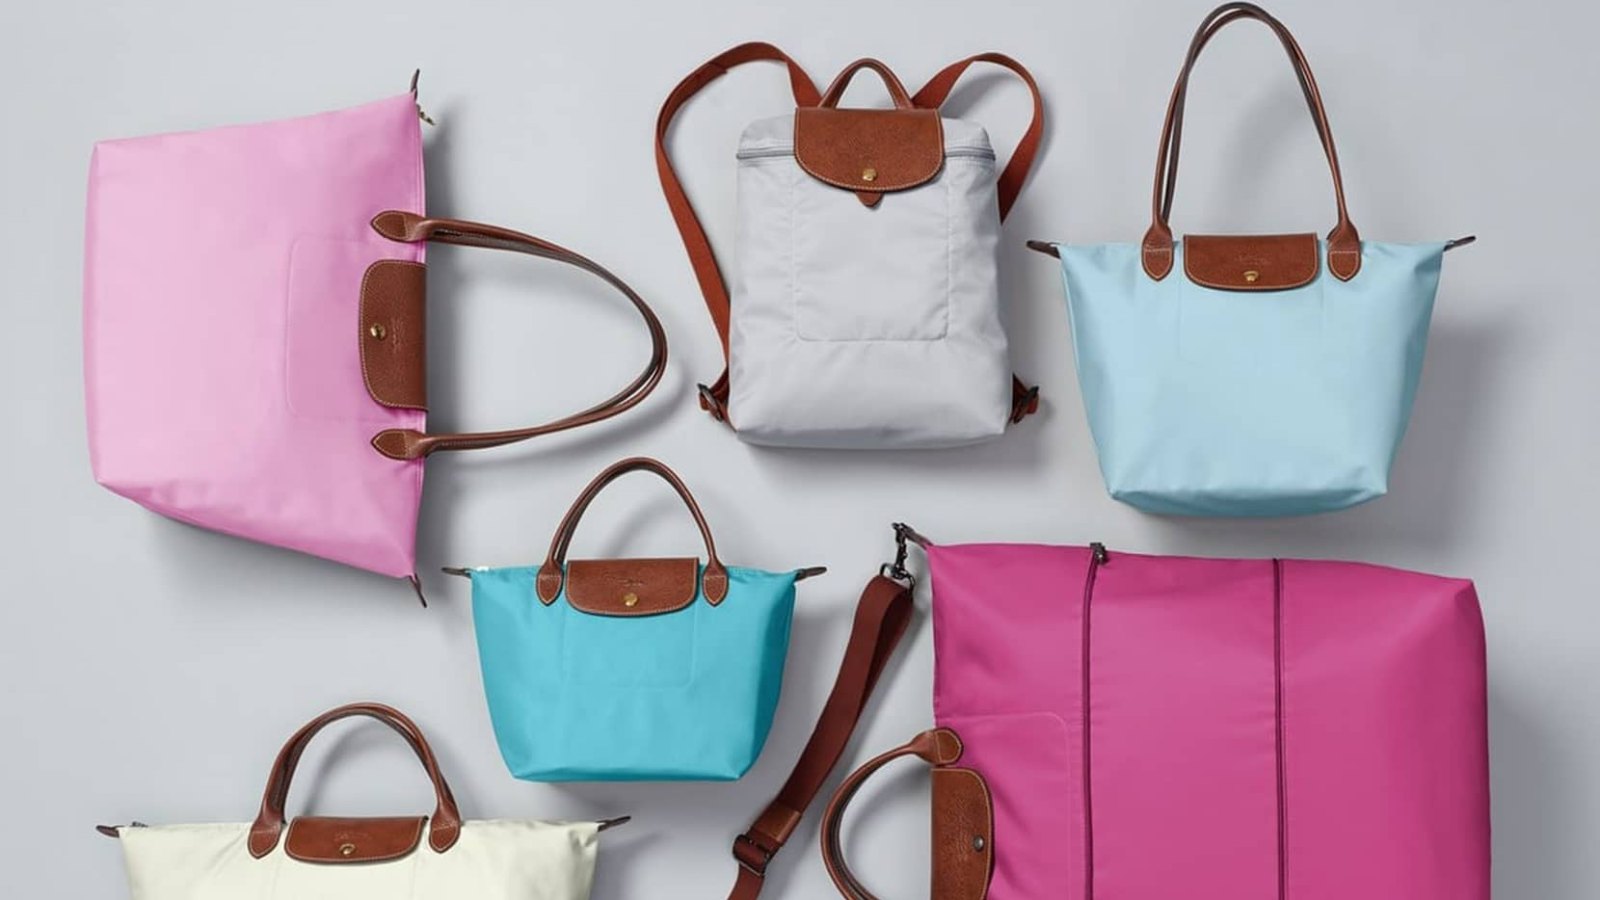 Pre-Loved Longchamp Bag Pouch handle with original strap, Color